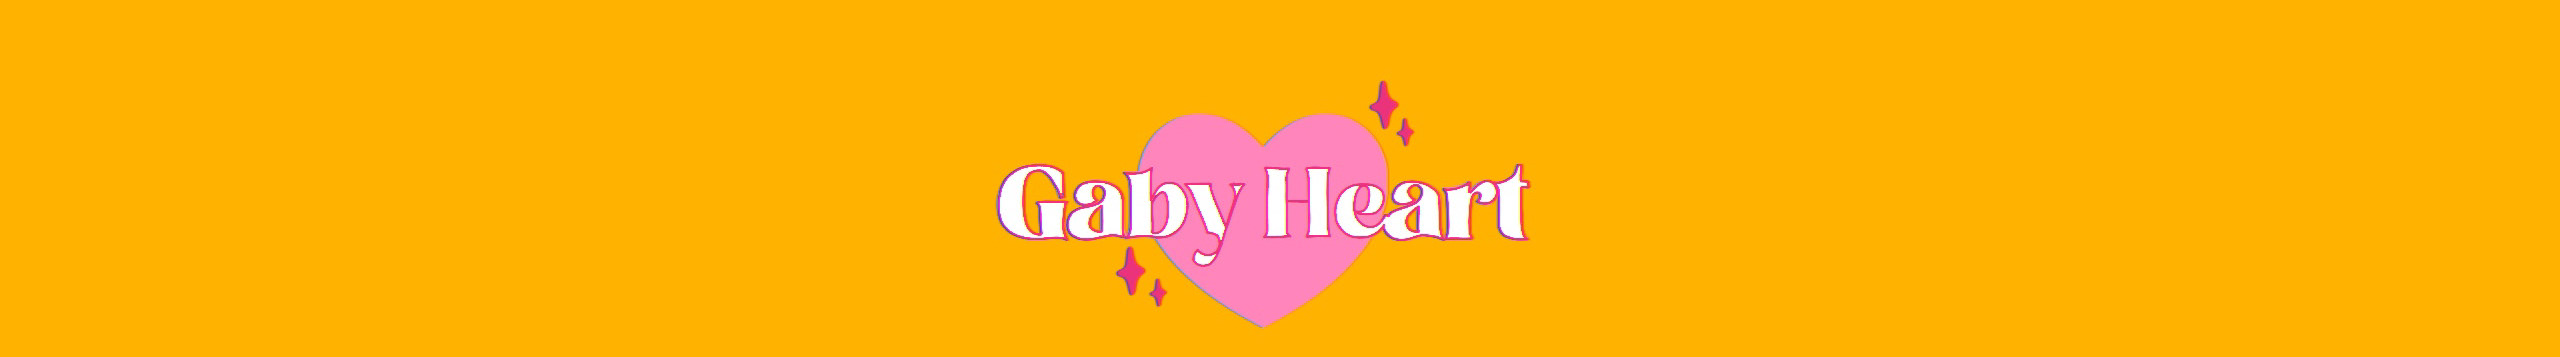 Gaby Heart's profile banner